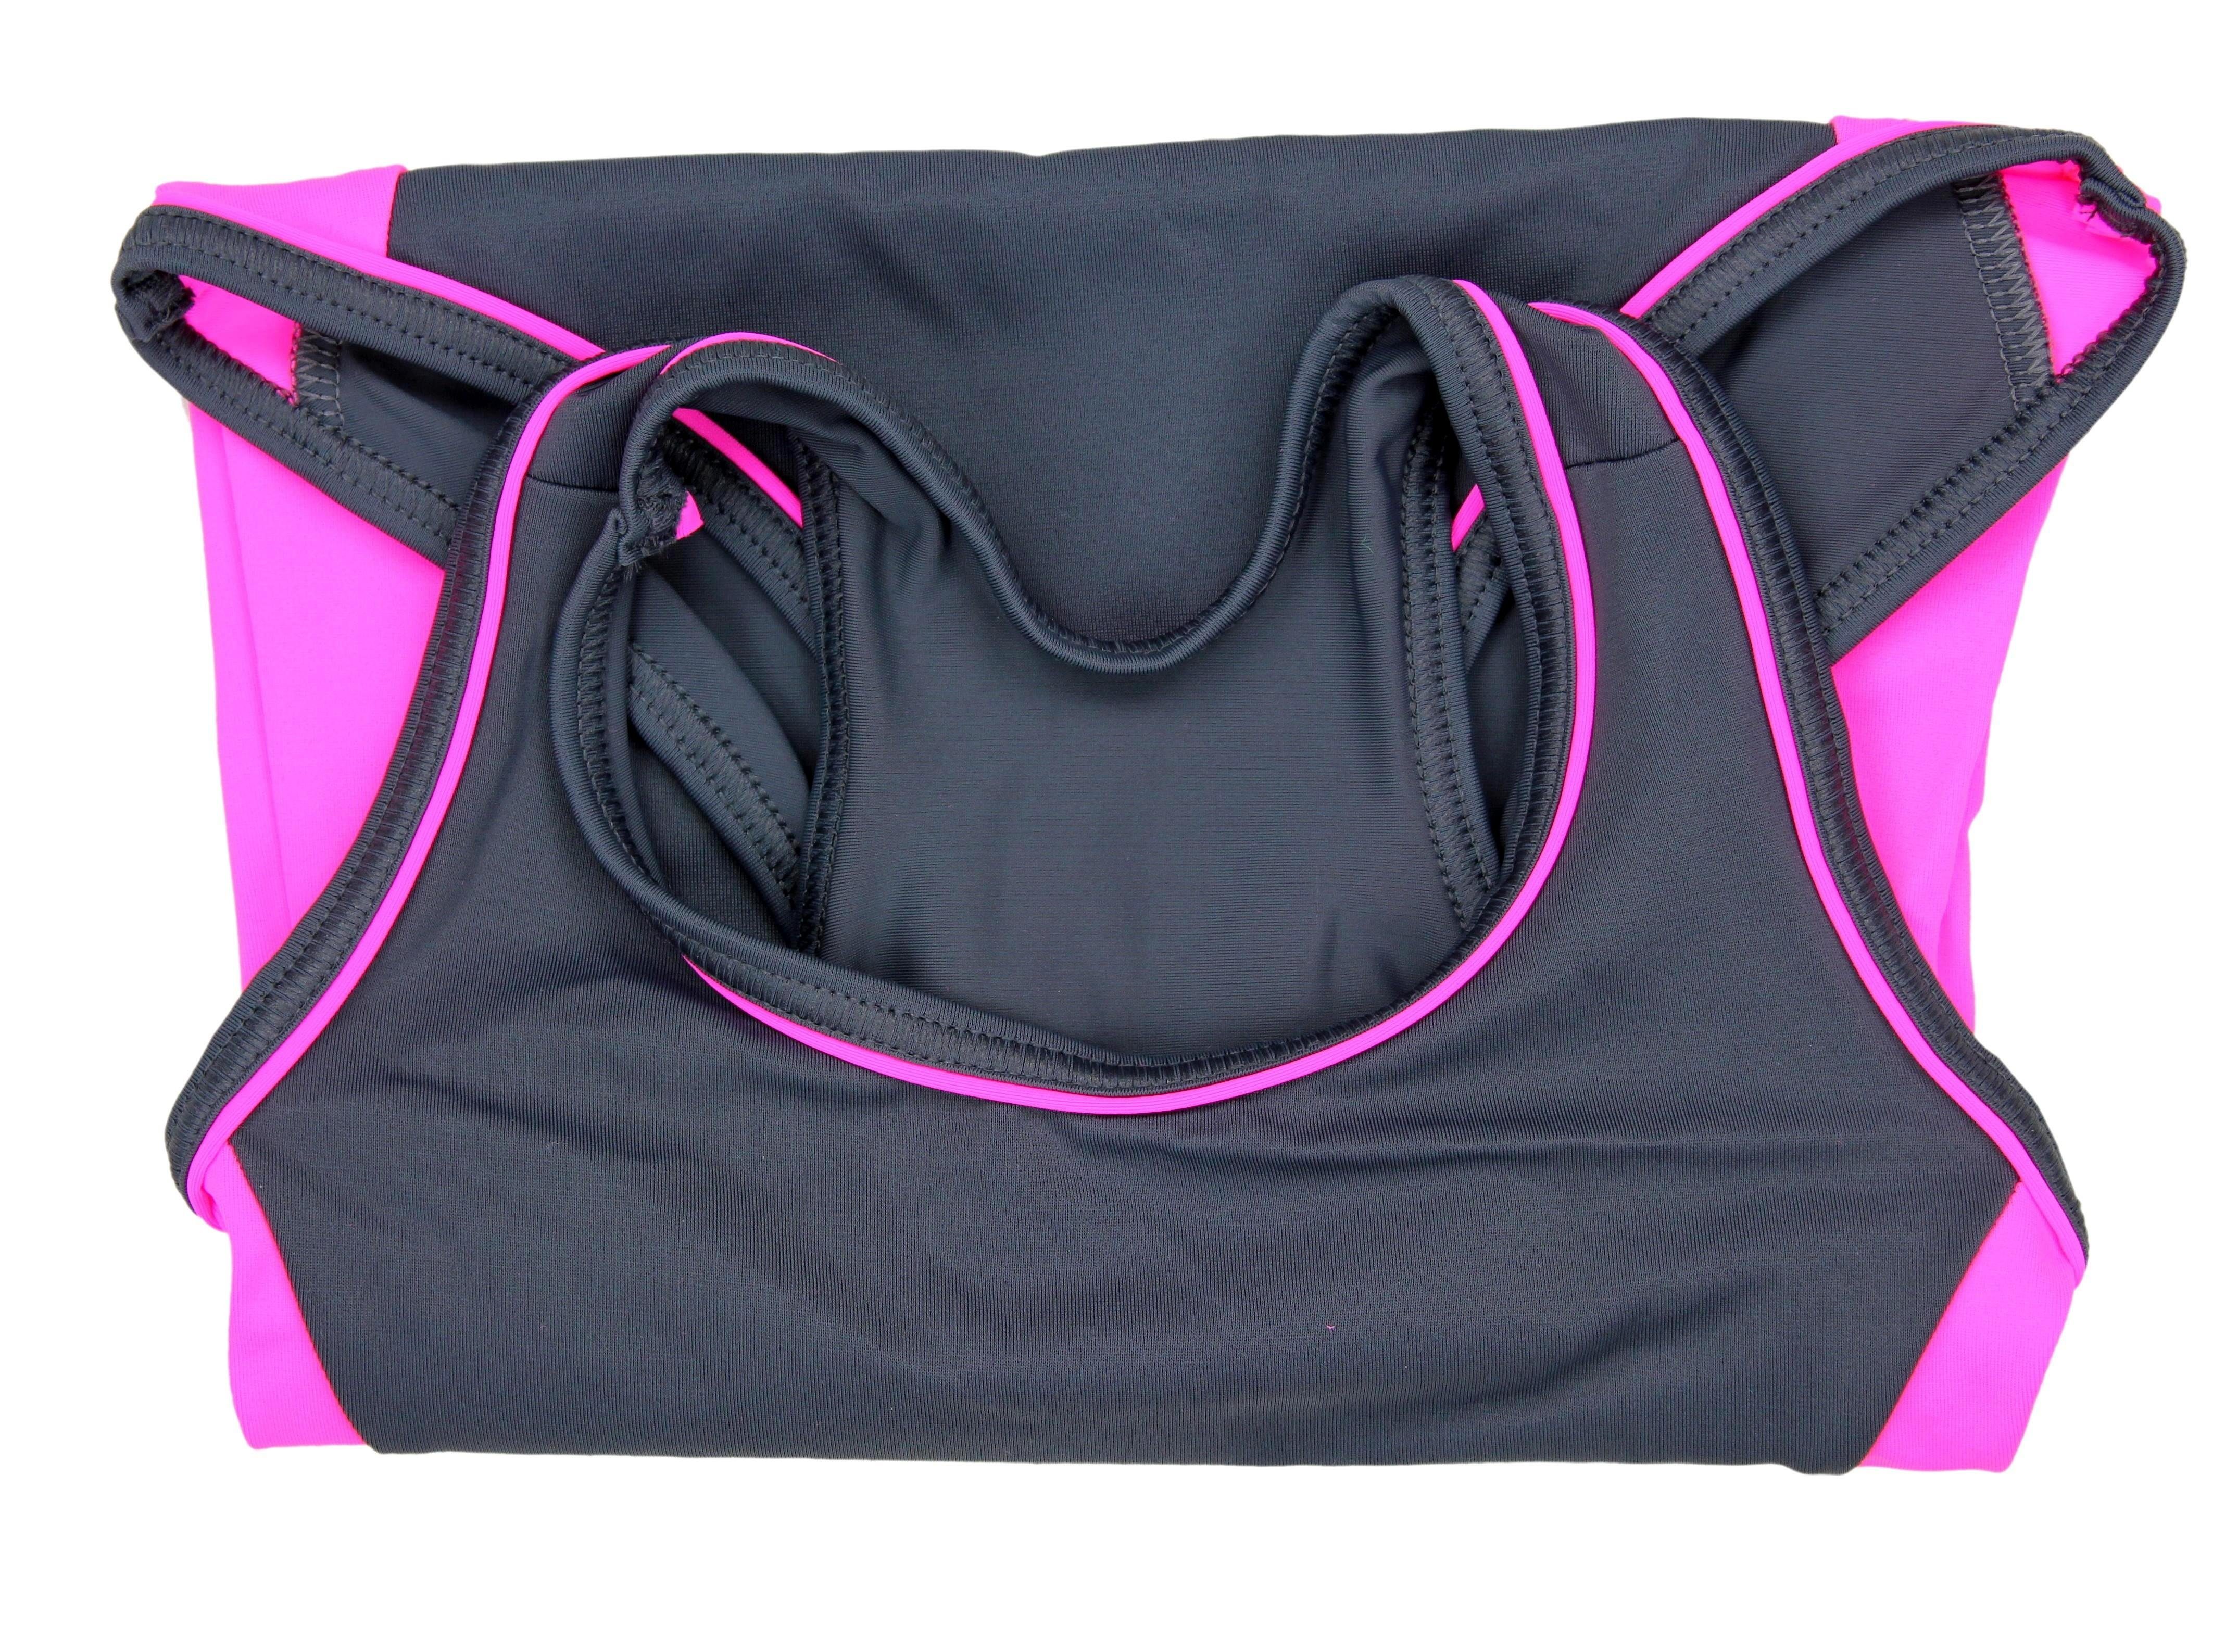 Schwimmanzug Badeanzug Aquarti mit Mädchen / Pink Grau Schwimmanzug Sportlich Aquarti Racerback